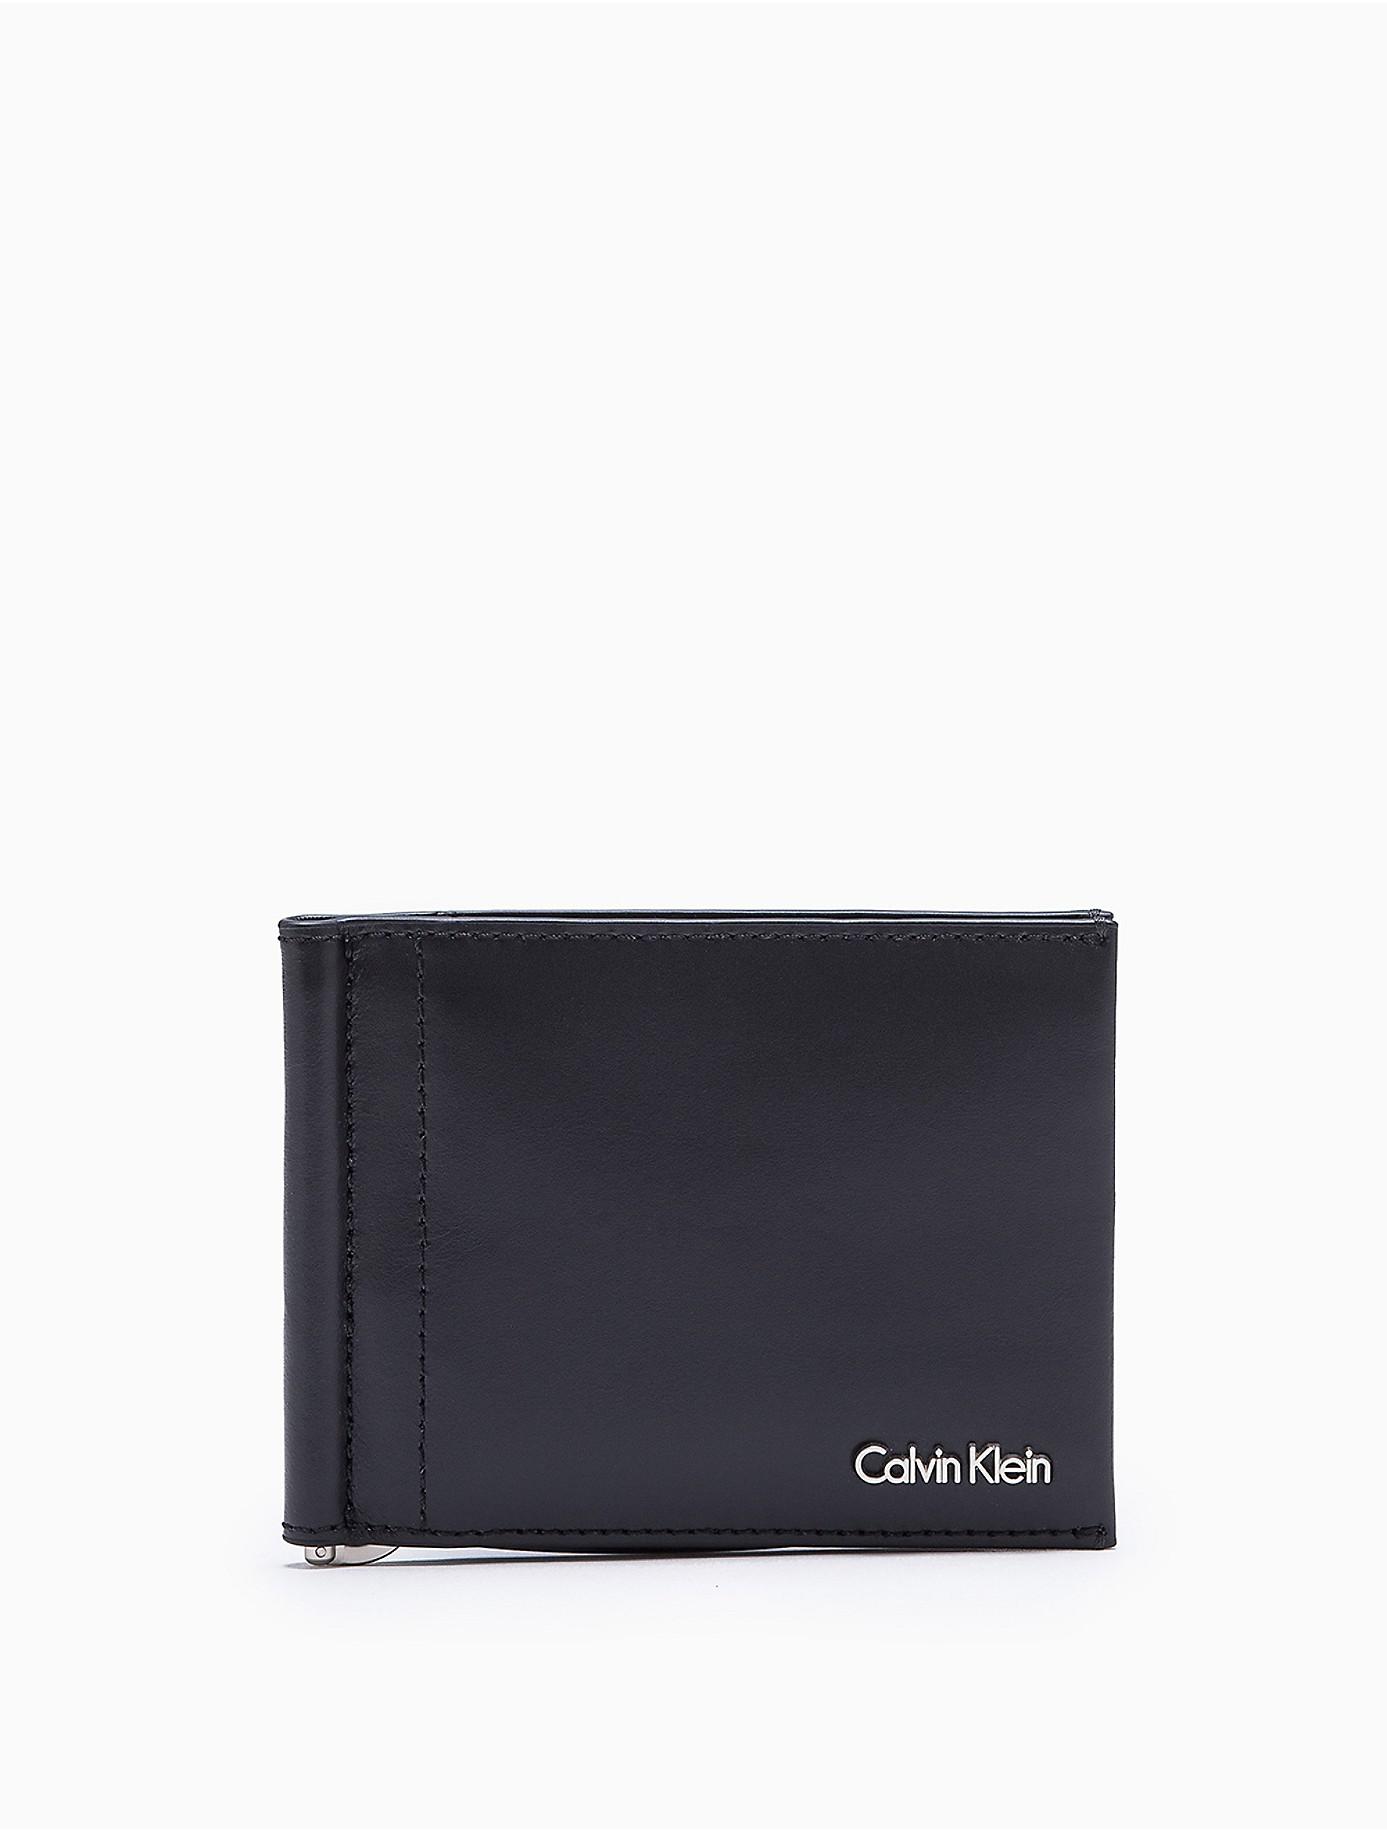 Calvin Klein Leather Logo Bifold Money Clip Wallet in Black for Men - Lyst